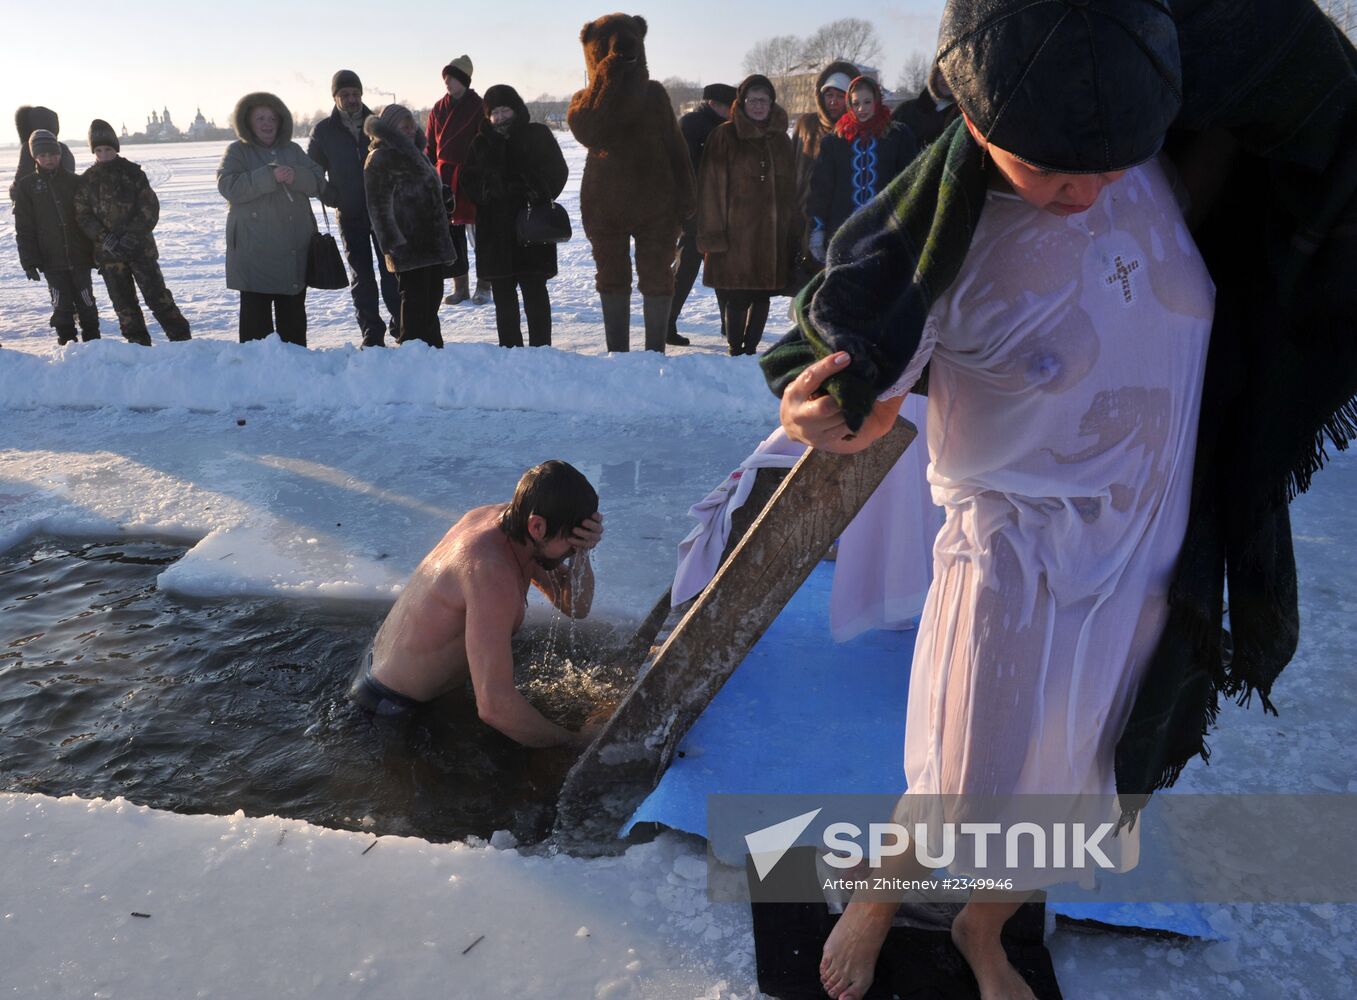 Russian Orthodox believers celebrate Epiphany